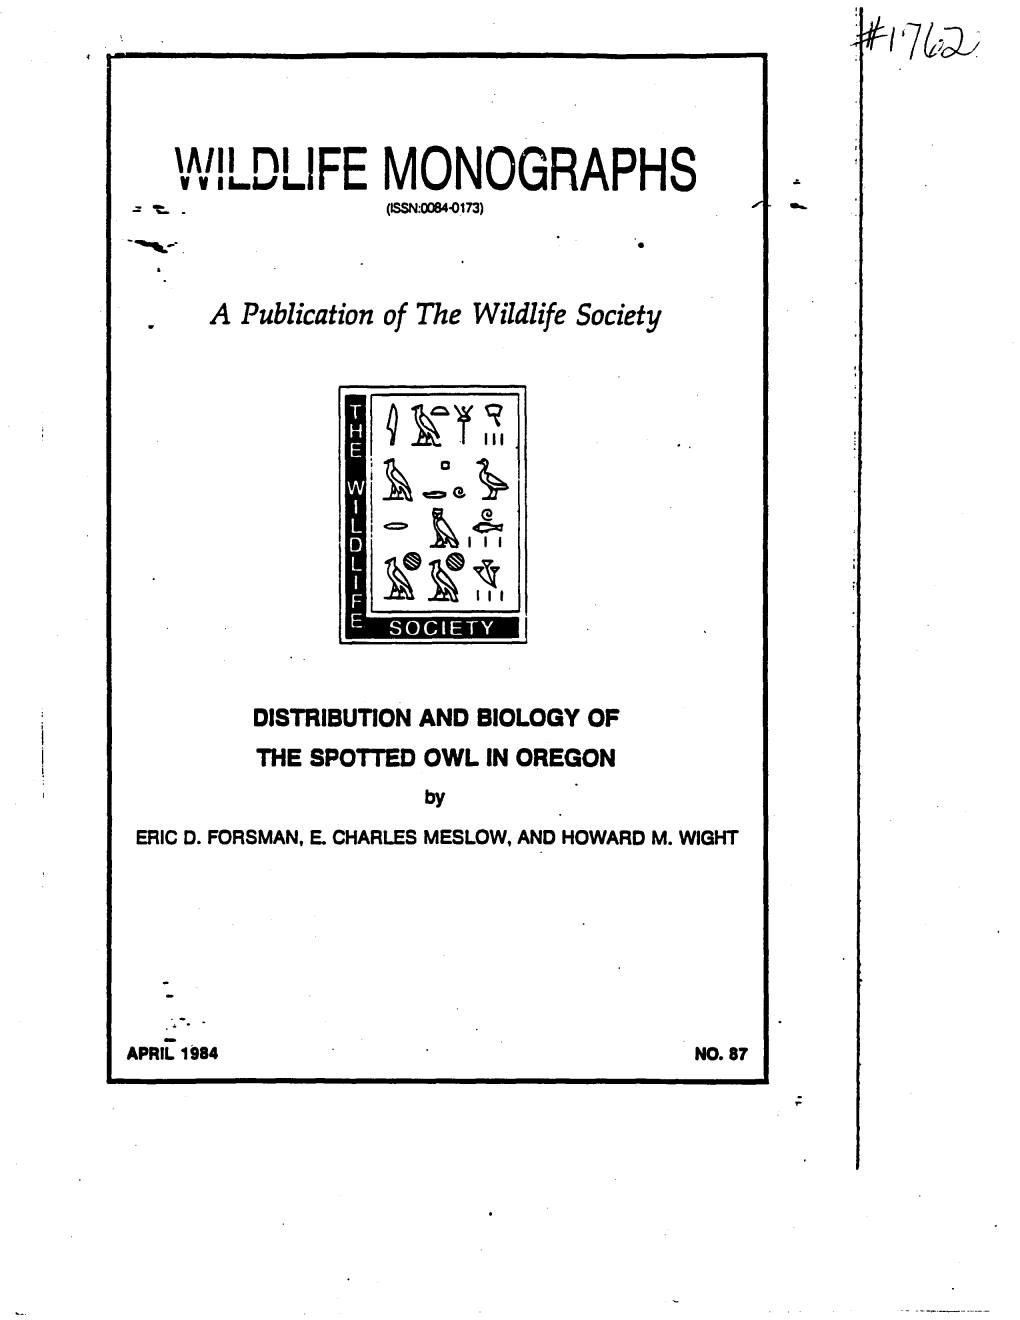 Wildlife Monographs (Issn:0084-0173)